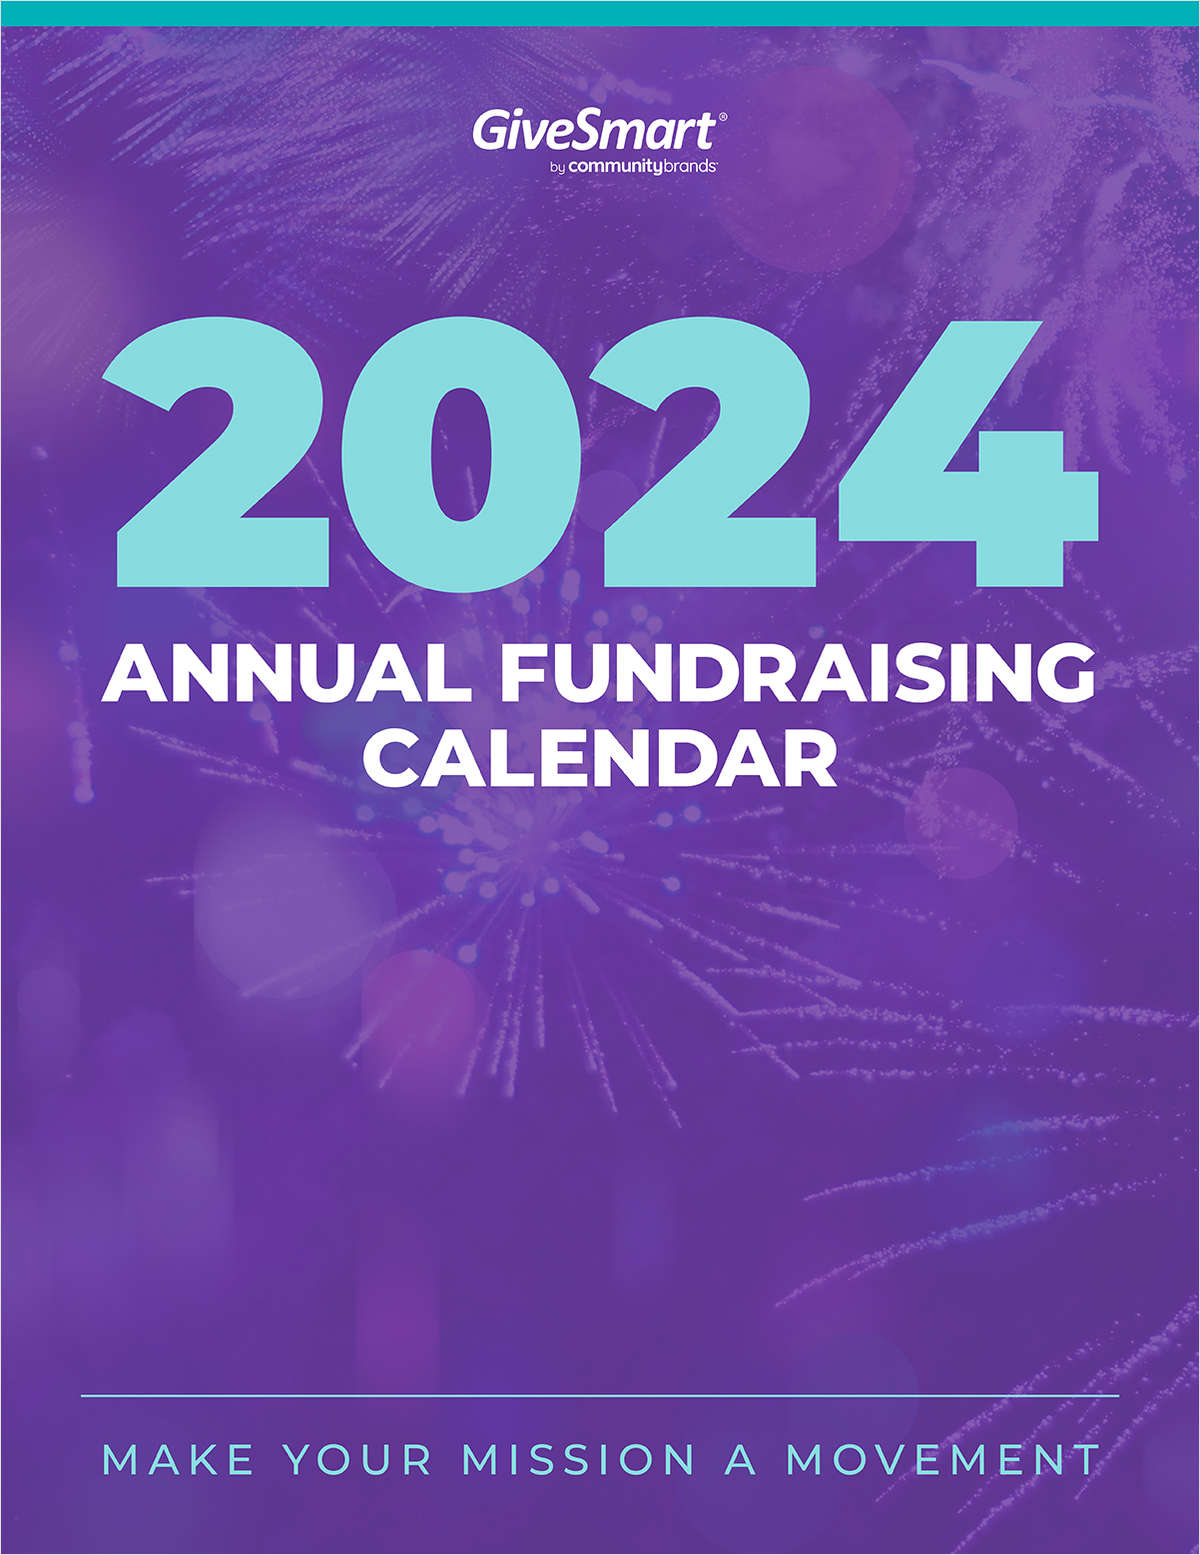 GiveSmart's 2024 Annual Fundraising Calendar